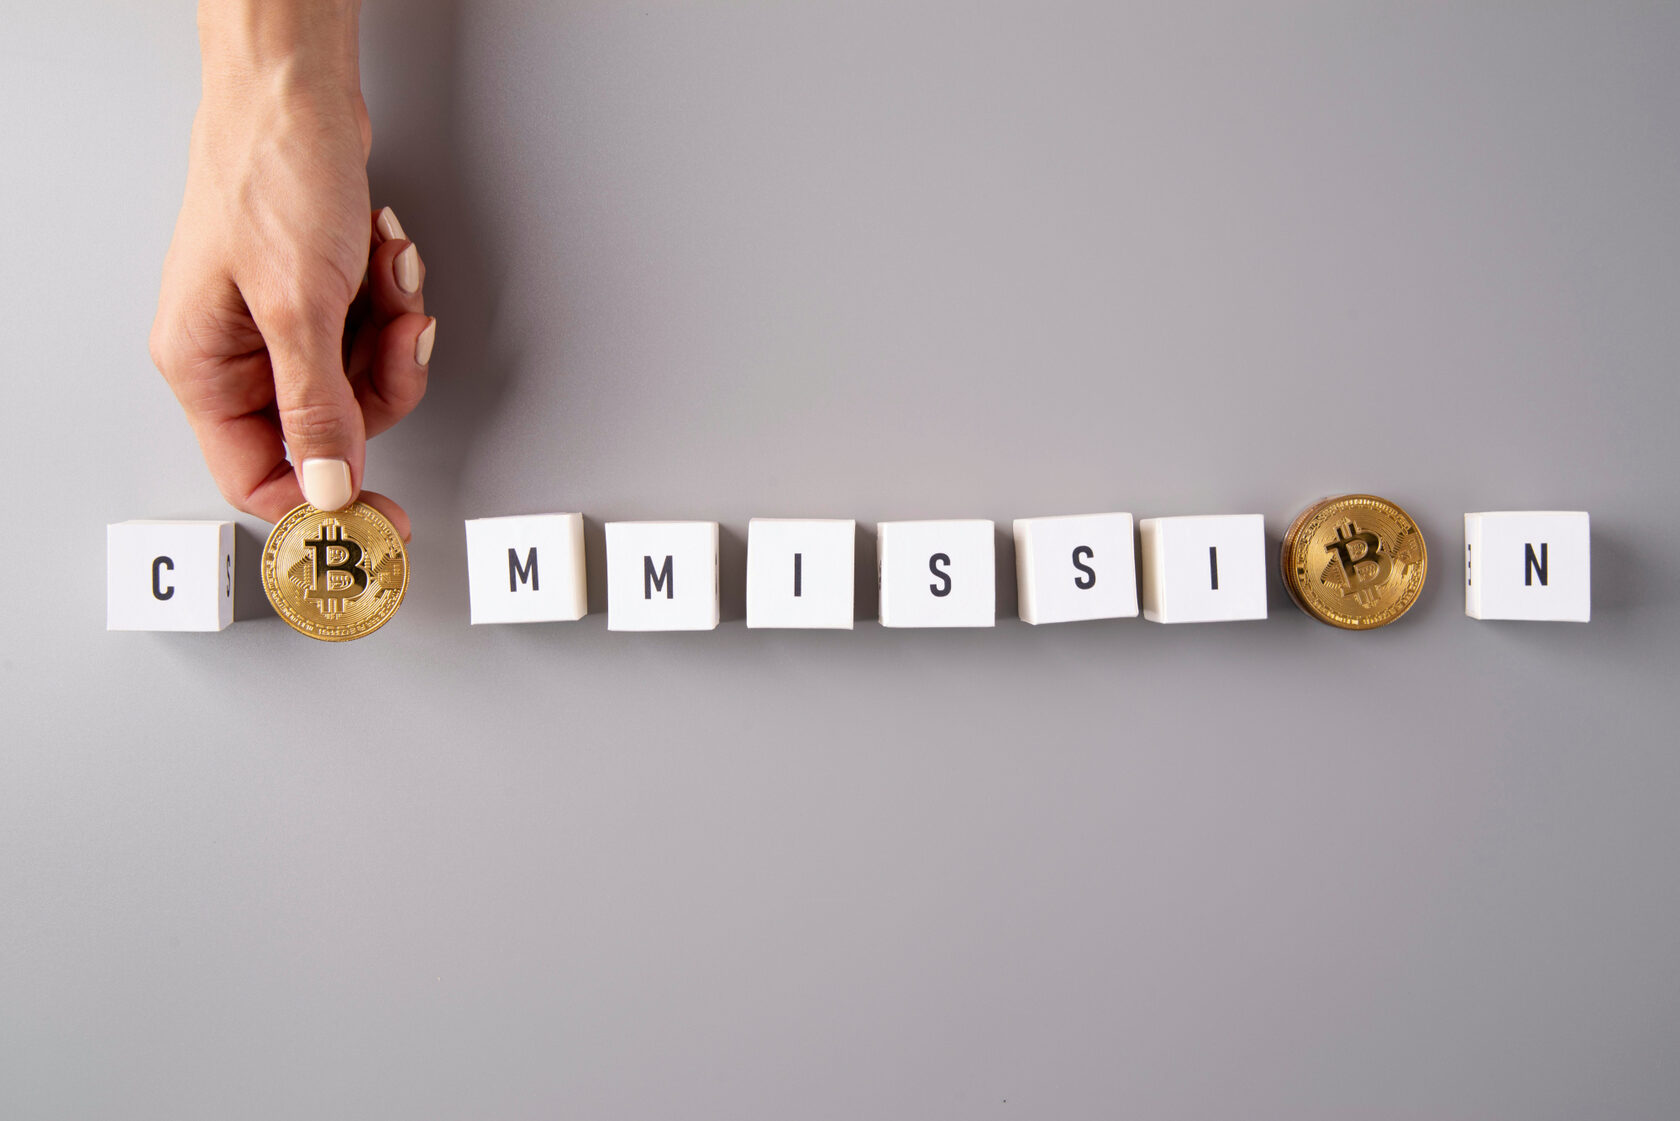 Palabra “commision” con monedas de bitcoin para simbolizar comisiones Binance